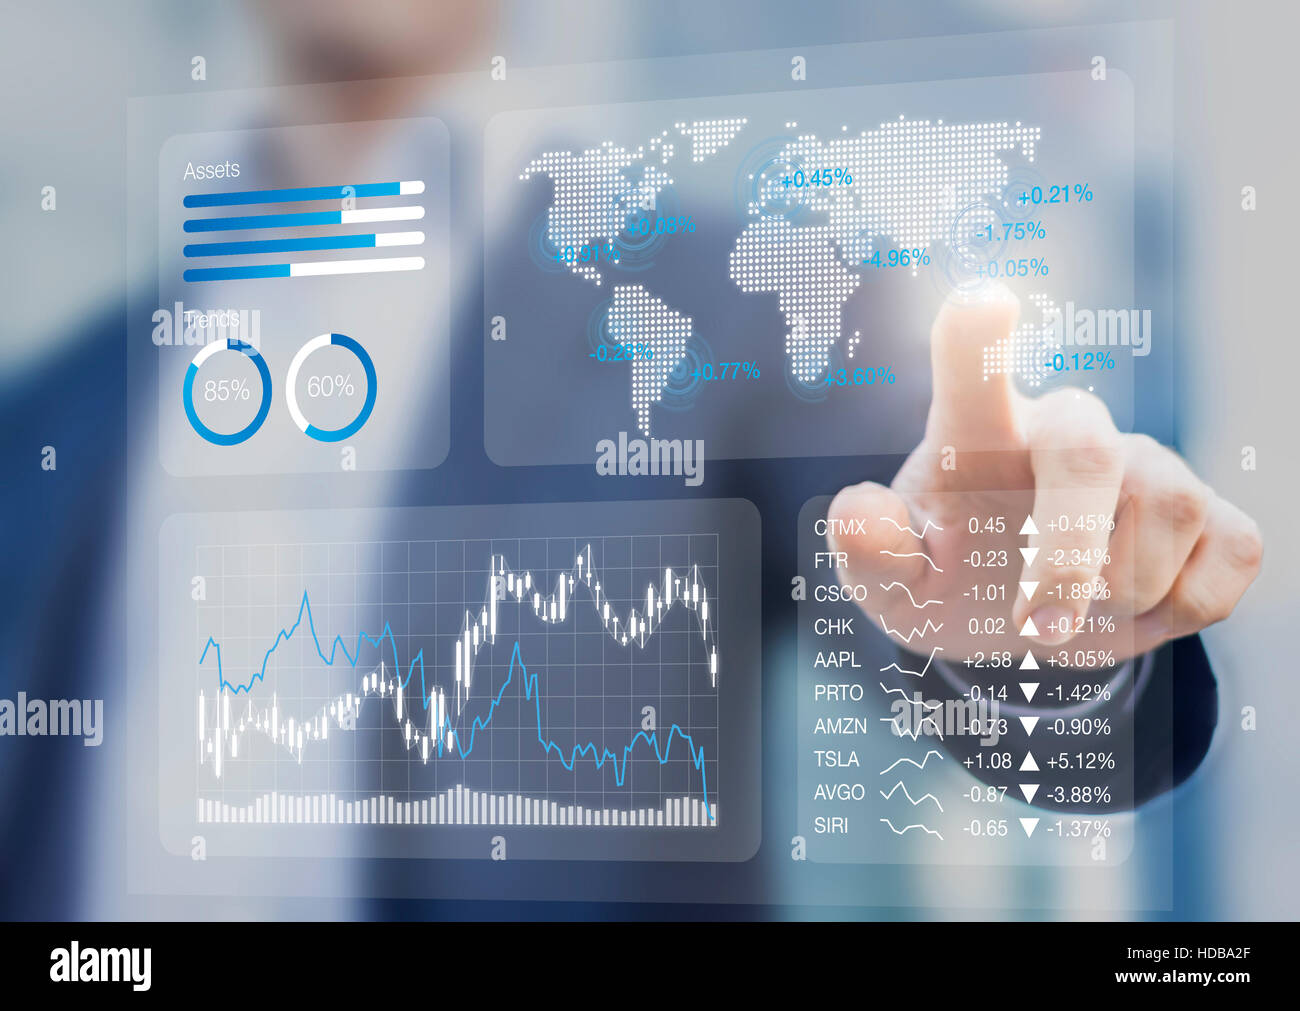 Financial dashboard with key performance indicators and charts analyzing stock market prices, businessman touching business portfolio kpi Stock Photo